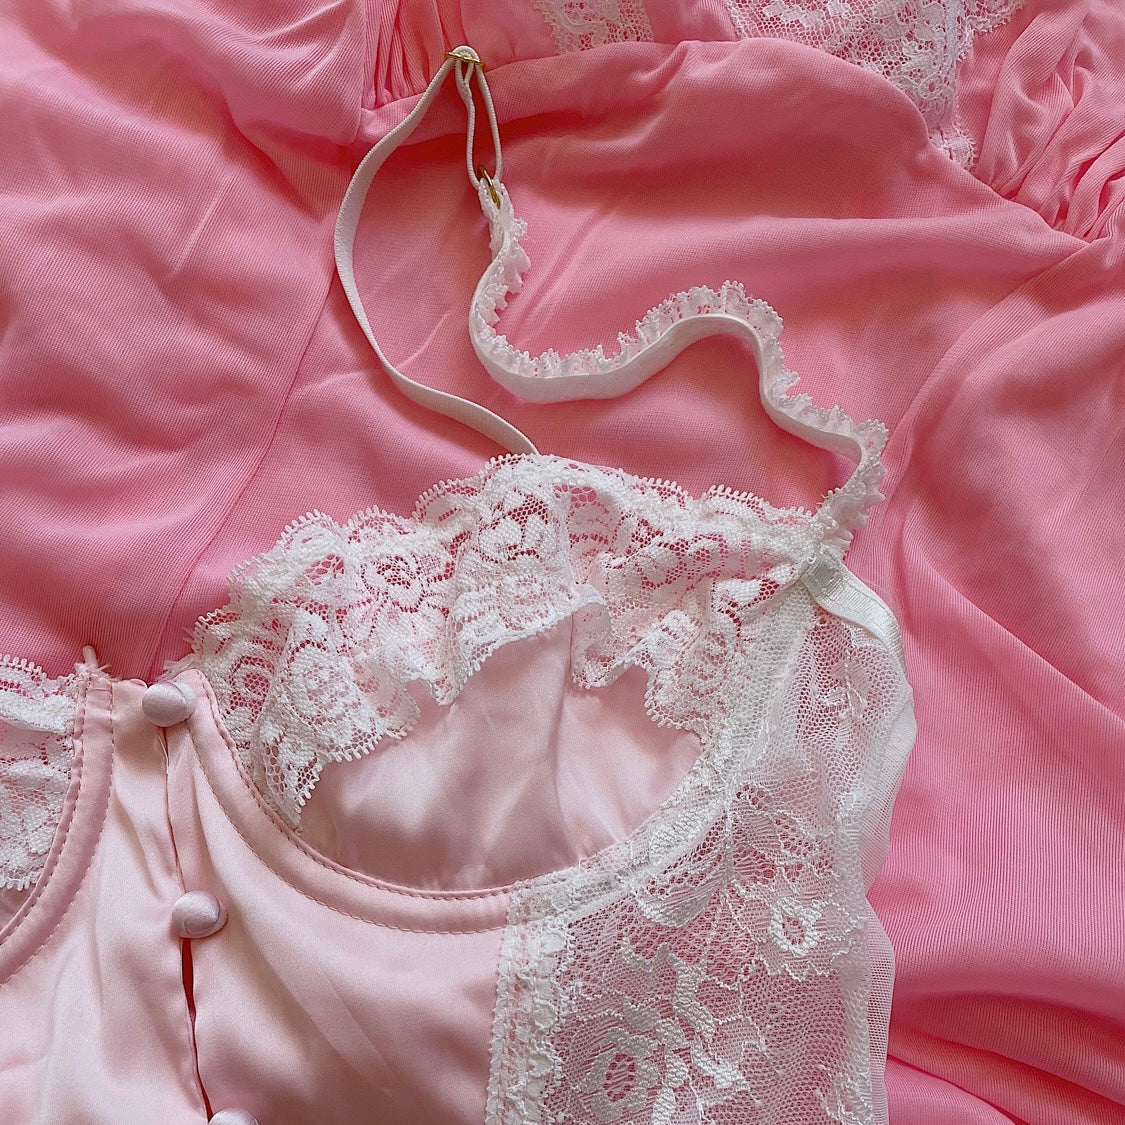 GRUNGE COQUETTE DROP, small pink patterned shapewear bodysuit